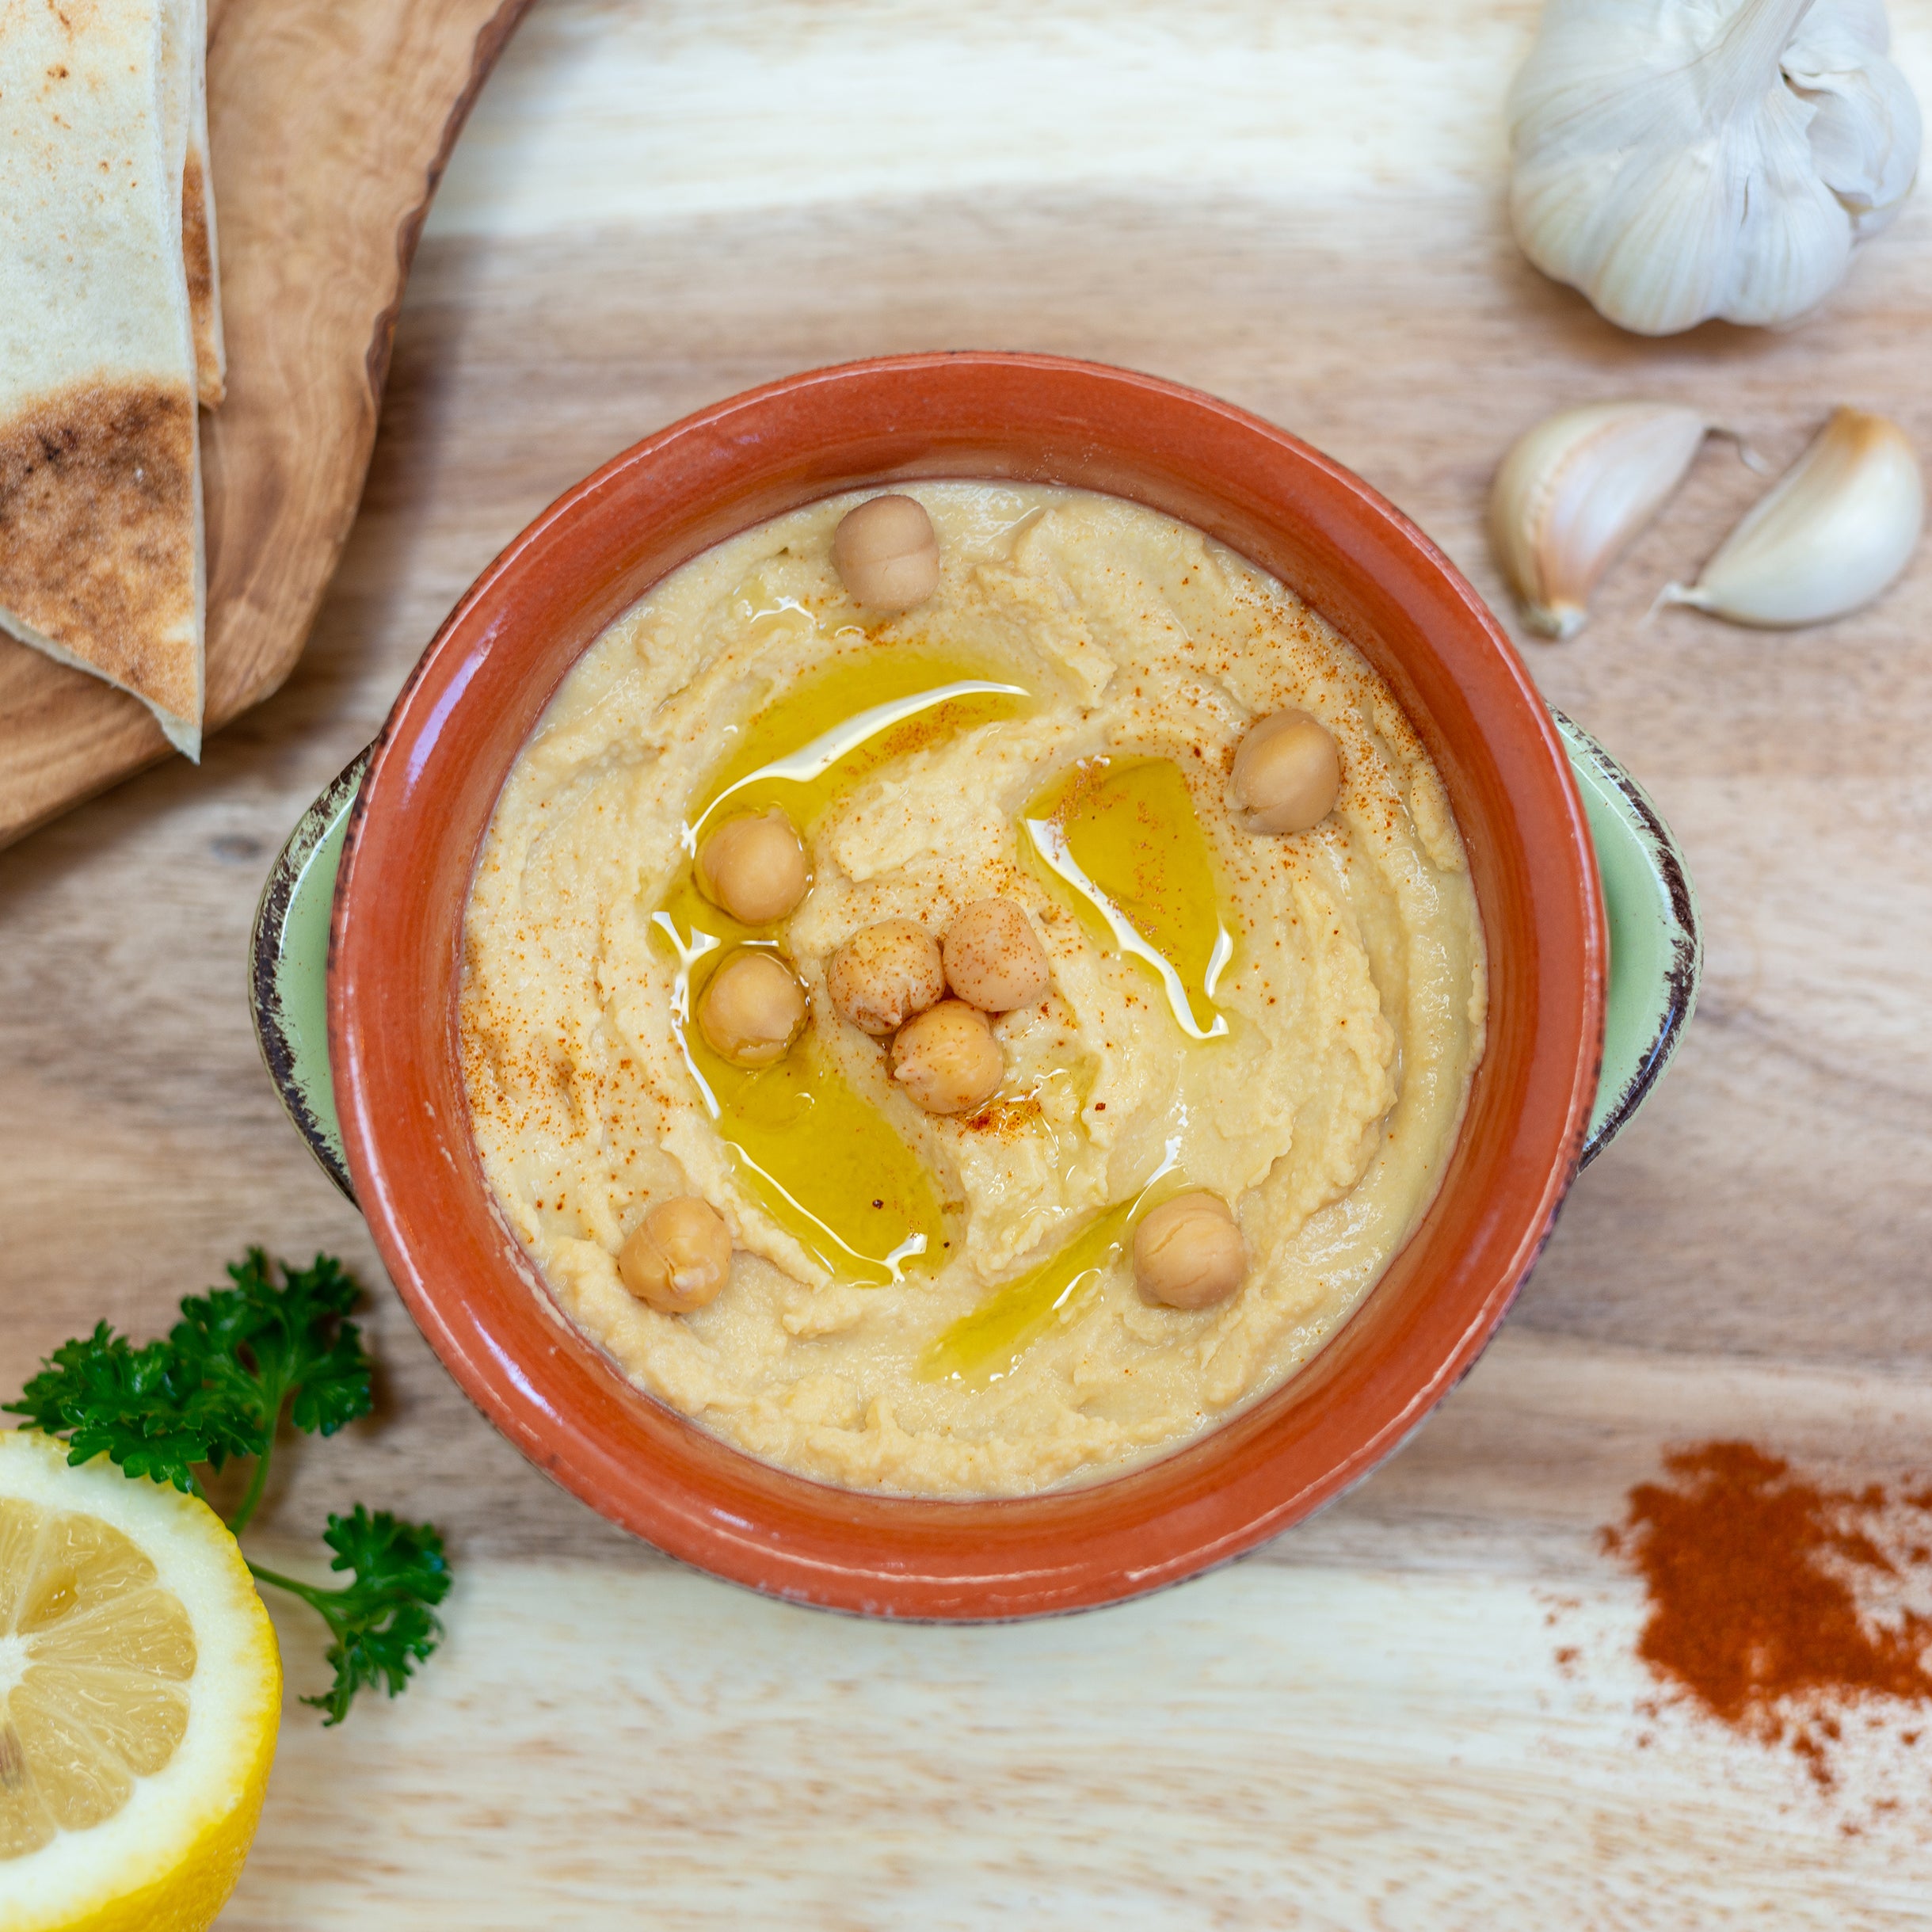 Lebanese Style Hummus